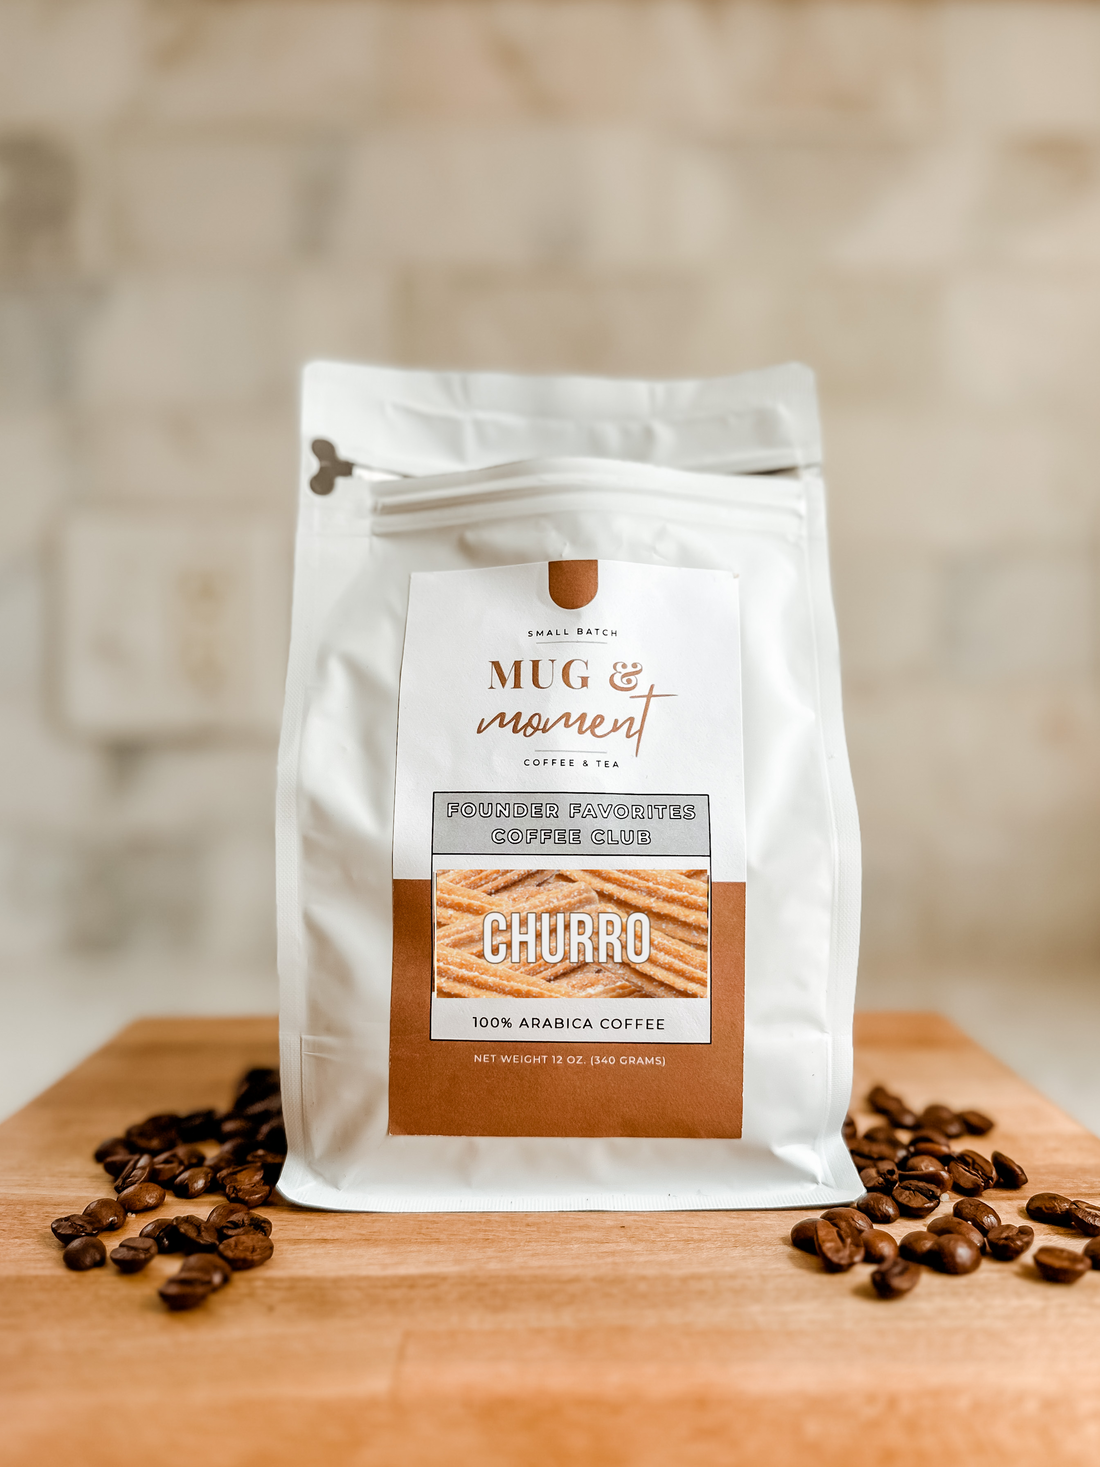 Churro - Mug & Moment Coffee